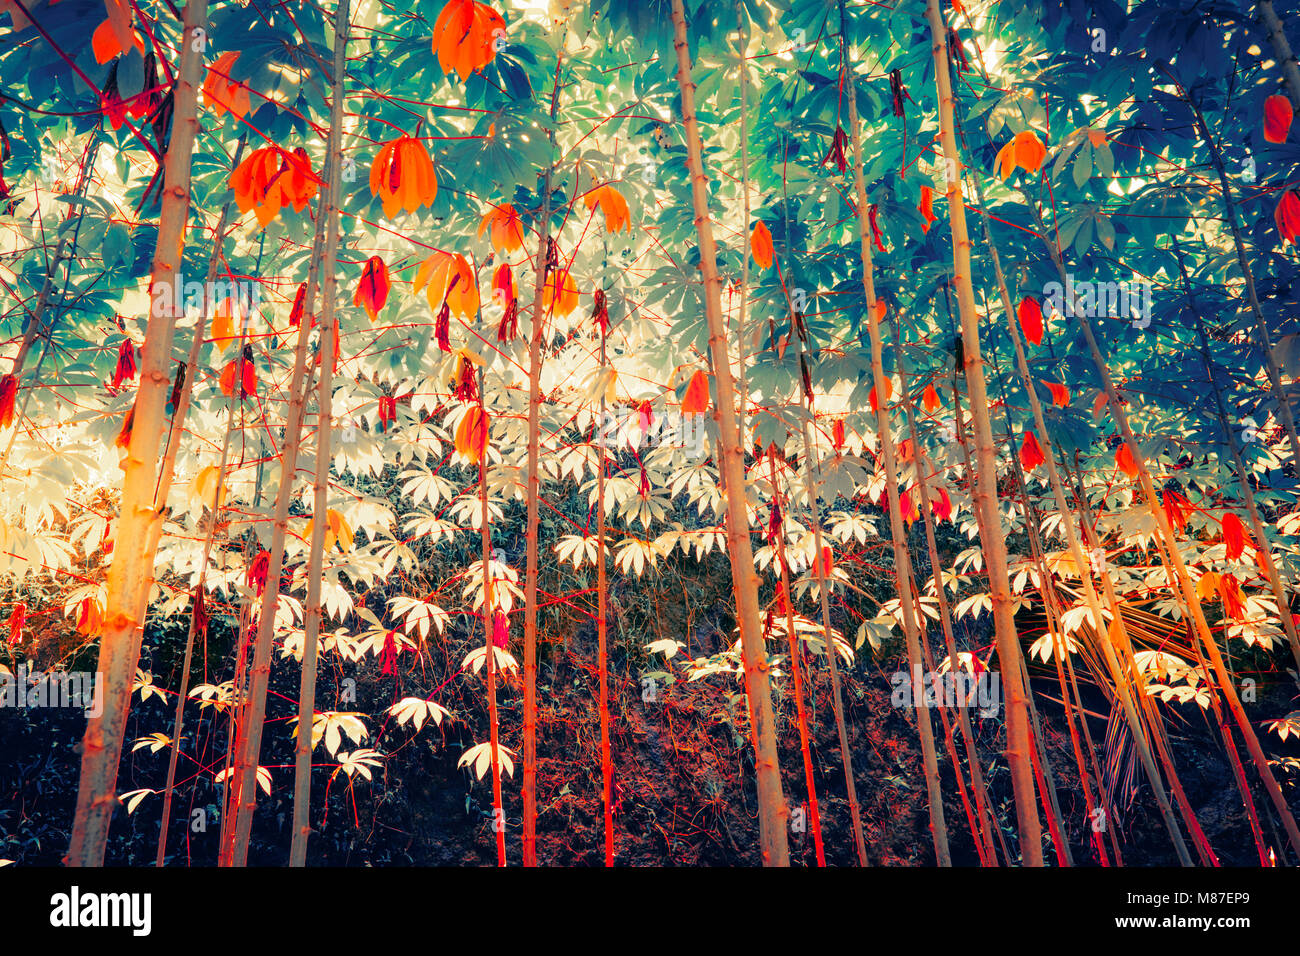 Surreal colors of fantasy tropical jungle plants with sun shining through dense vegetation Stock Photo